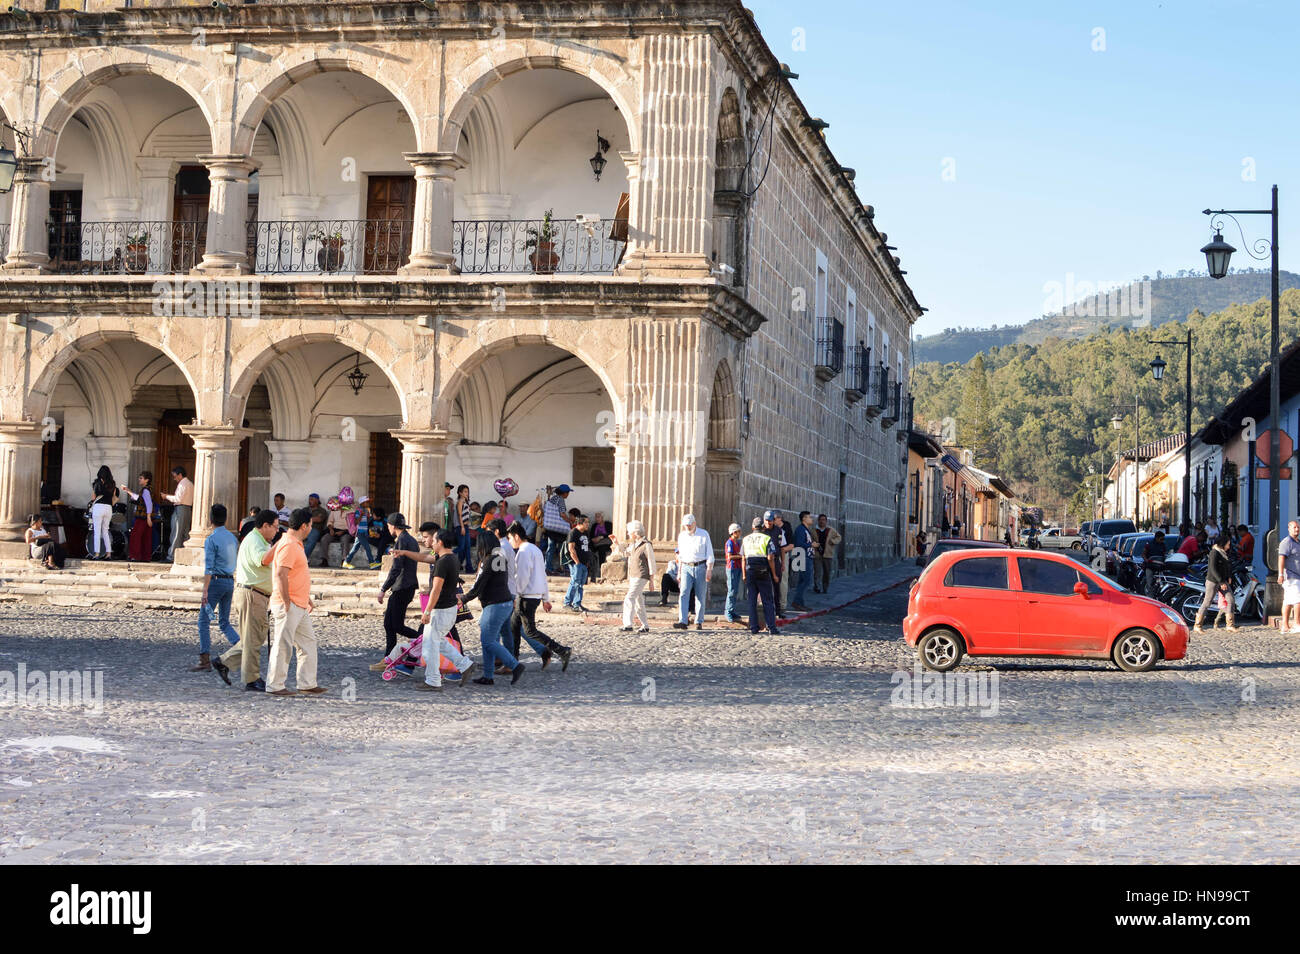 Antigua, Guatemala - February 15, 2015: People are seen walking the cobble stone roads by the main Plaza of Antigua, Guatemala Stock Photo